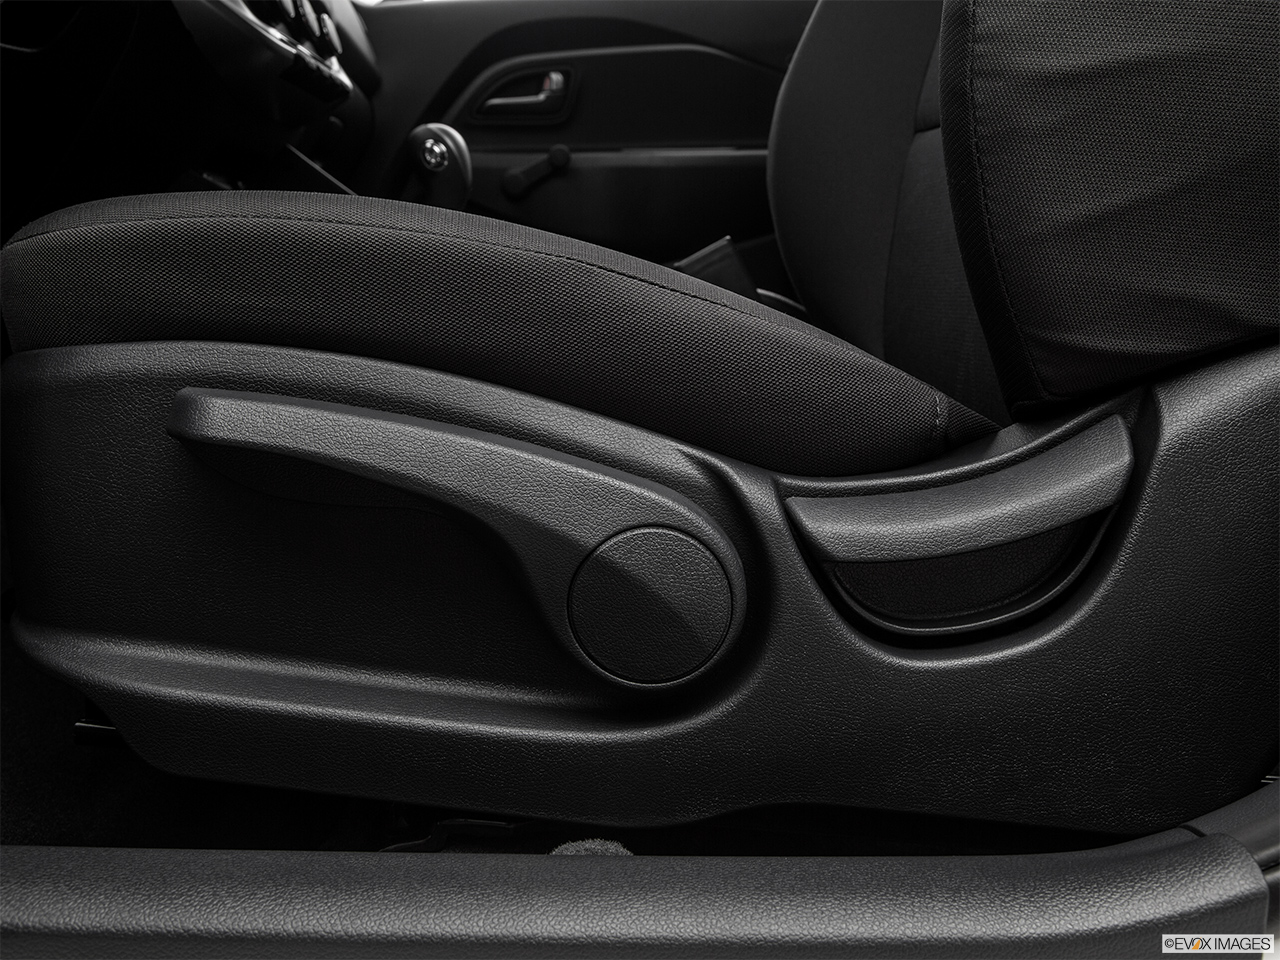 2016 Kia Rio 5-door LX Seat Adjustment Controllers. 